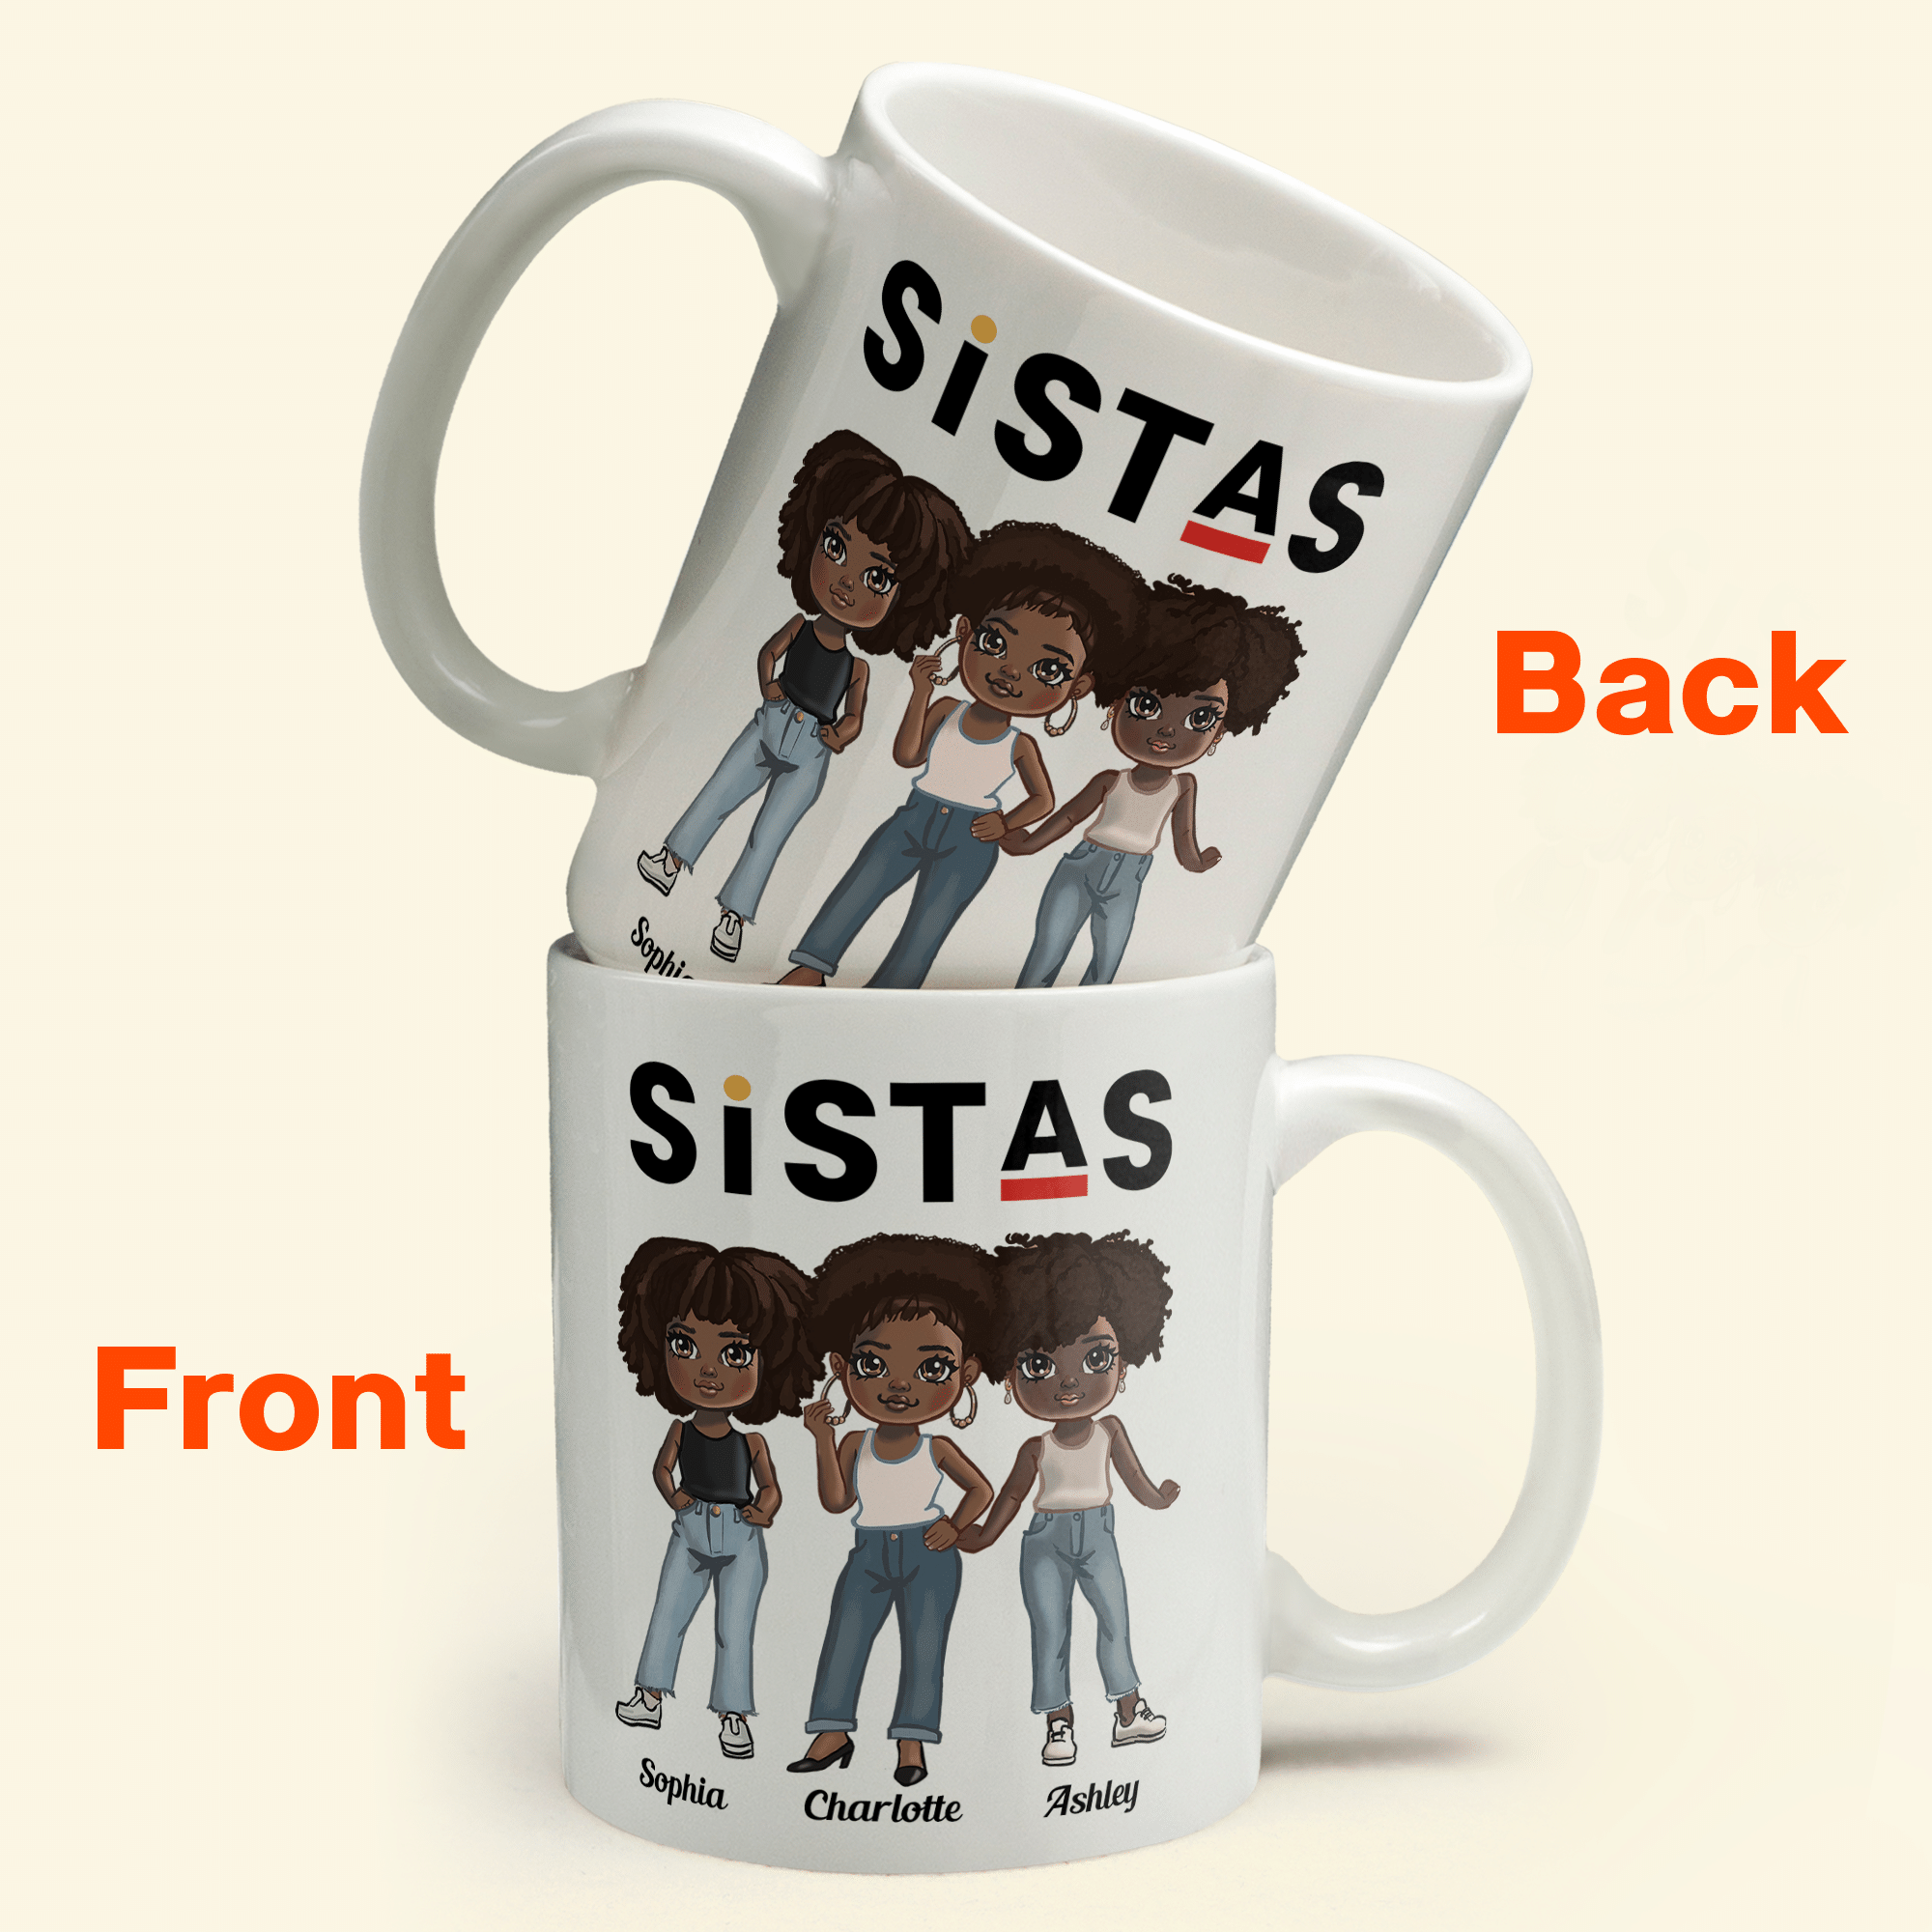 Sistas  - Personalized Mug - Birthday Gift For Sista, Sister, Soul Sister, Best Friend, Bff, Bestie, Friend - Fashion Girls Illustration